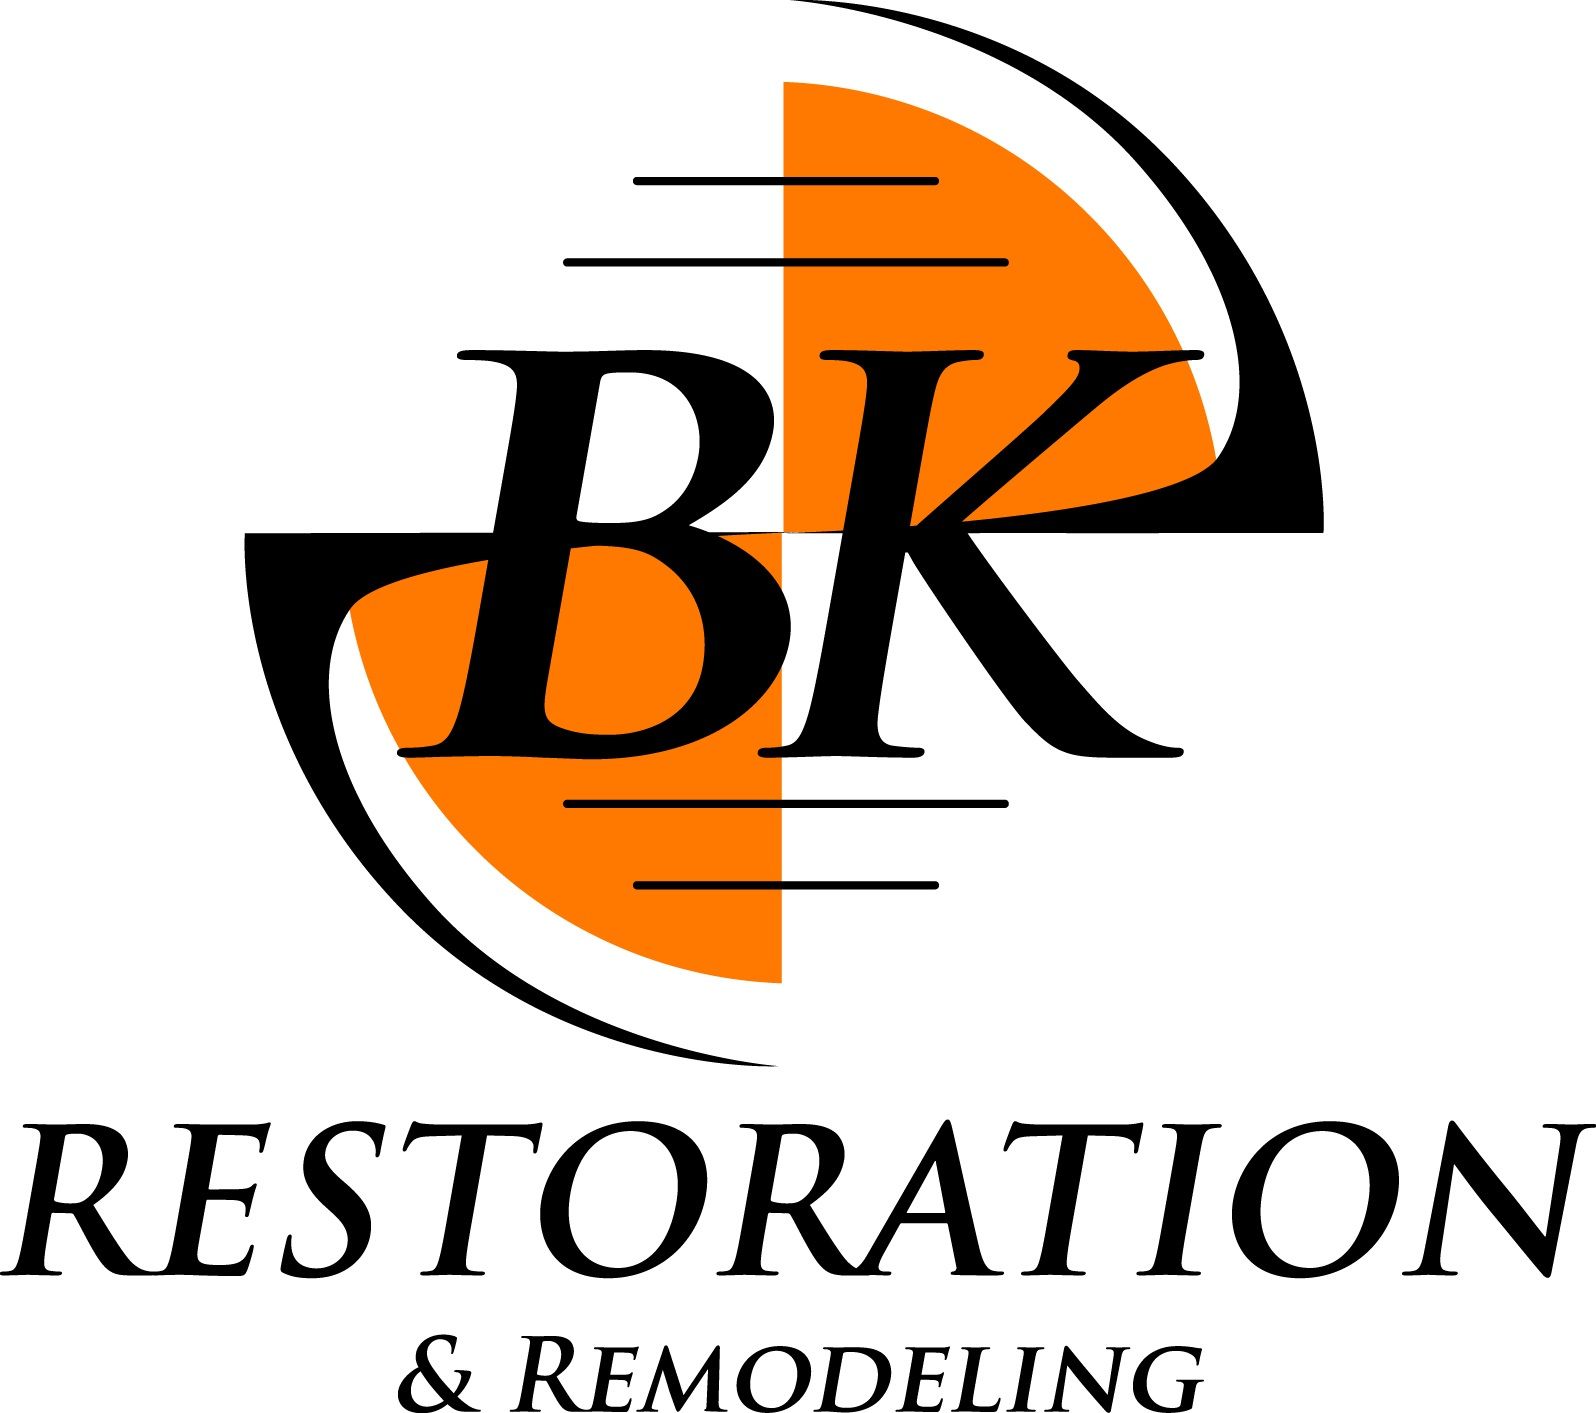 BK Restoration